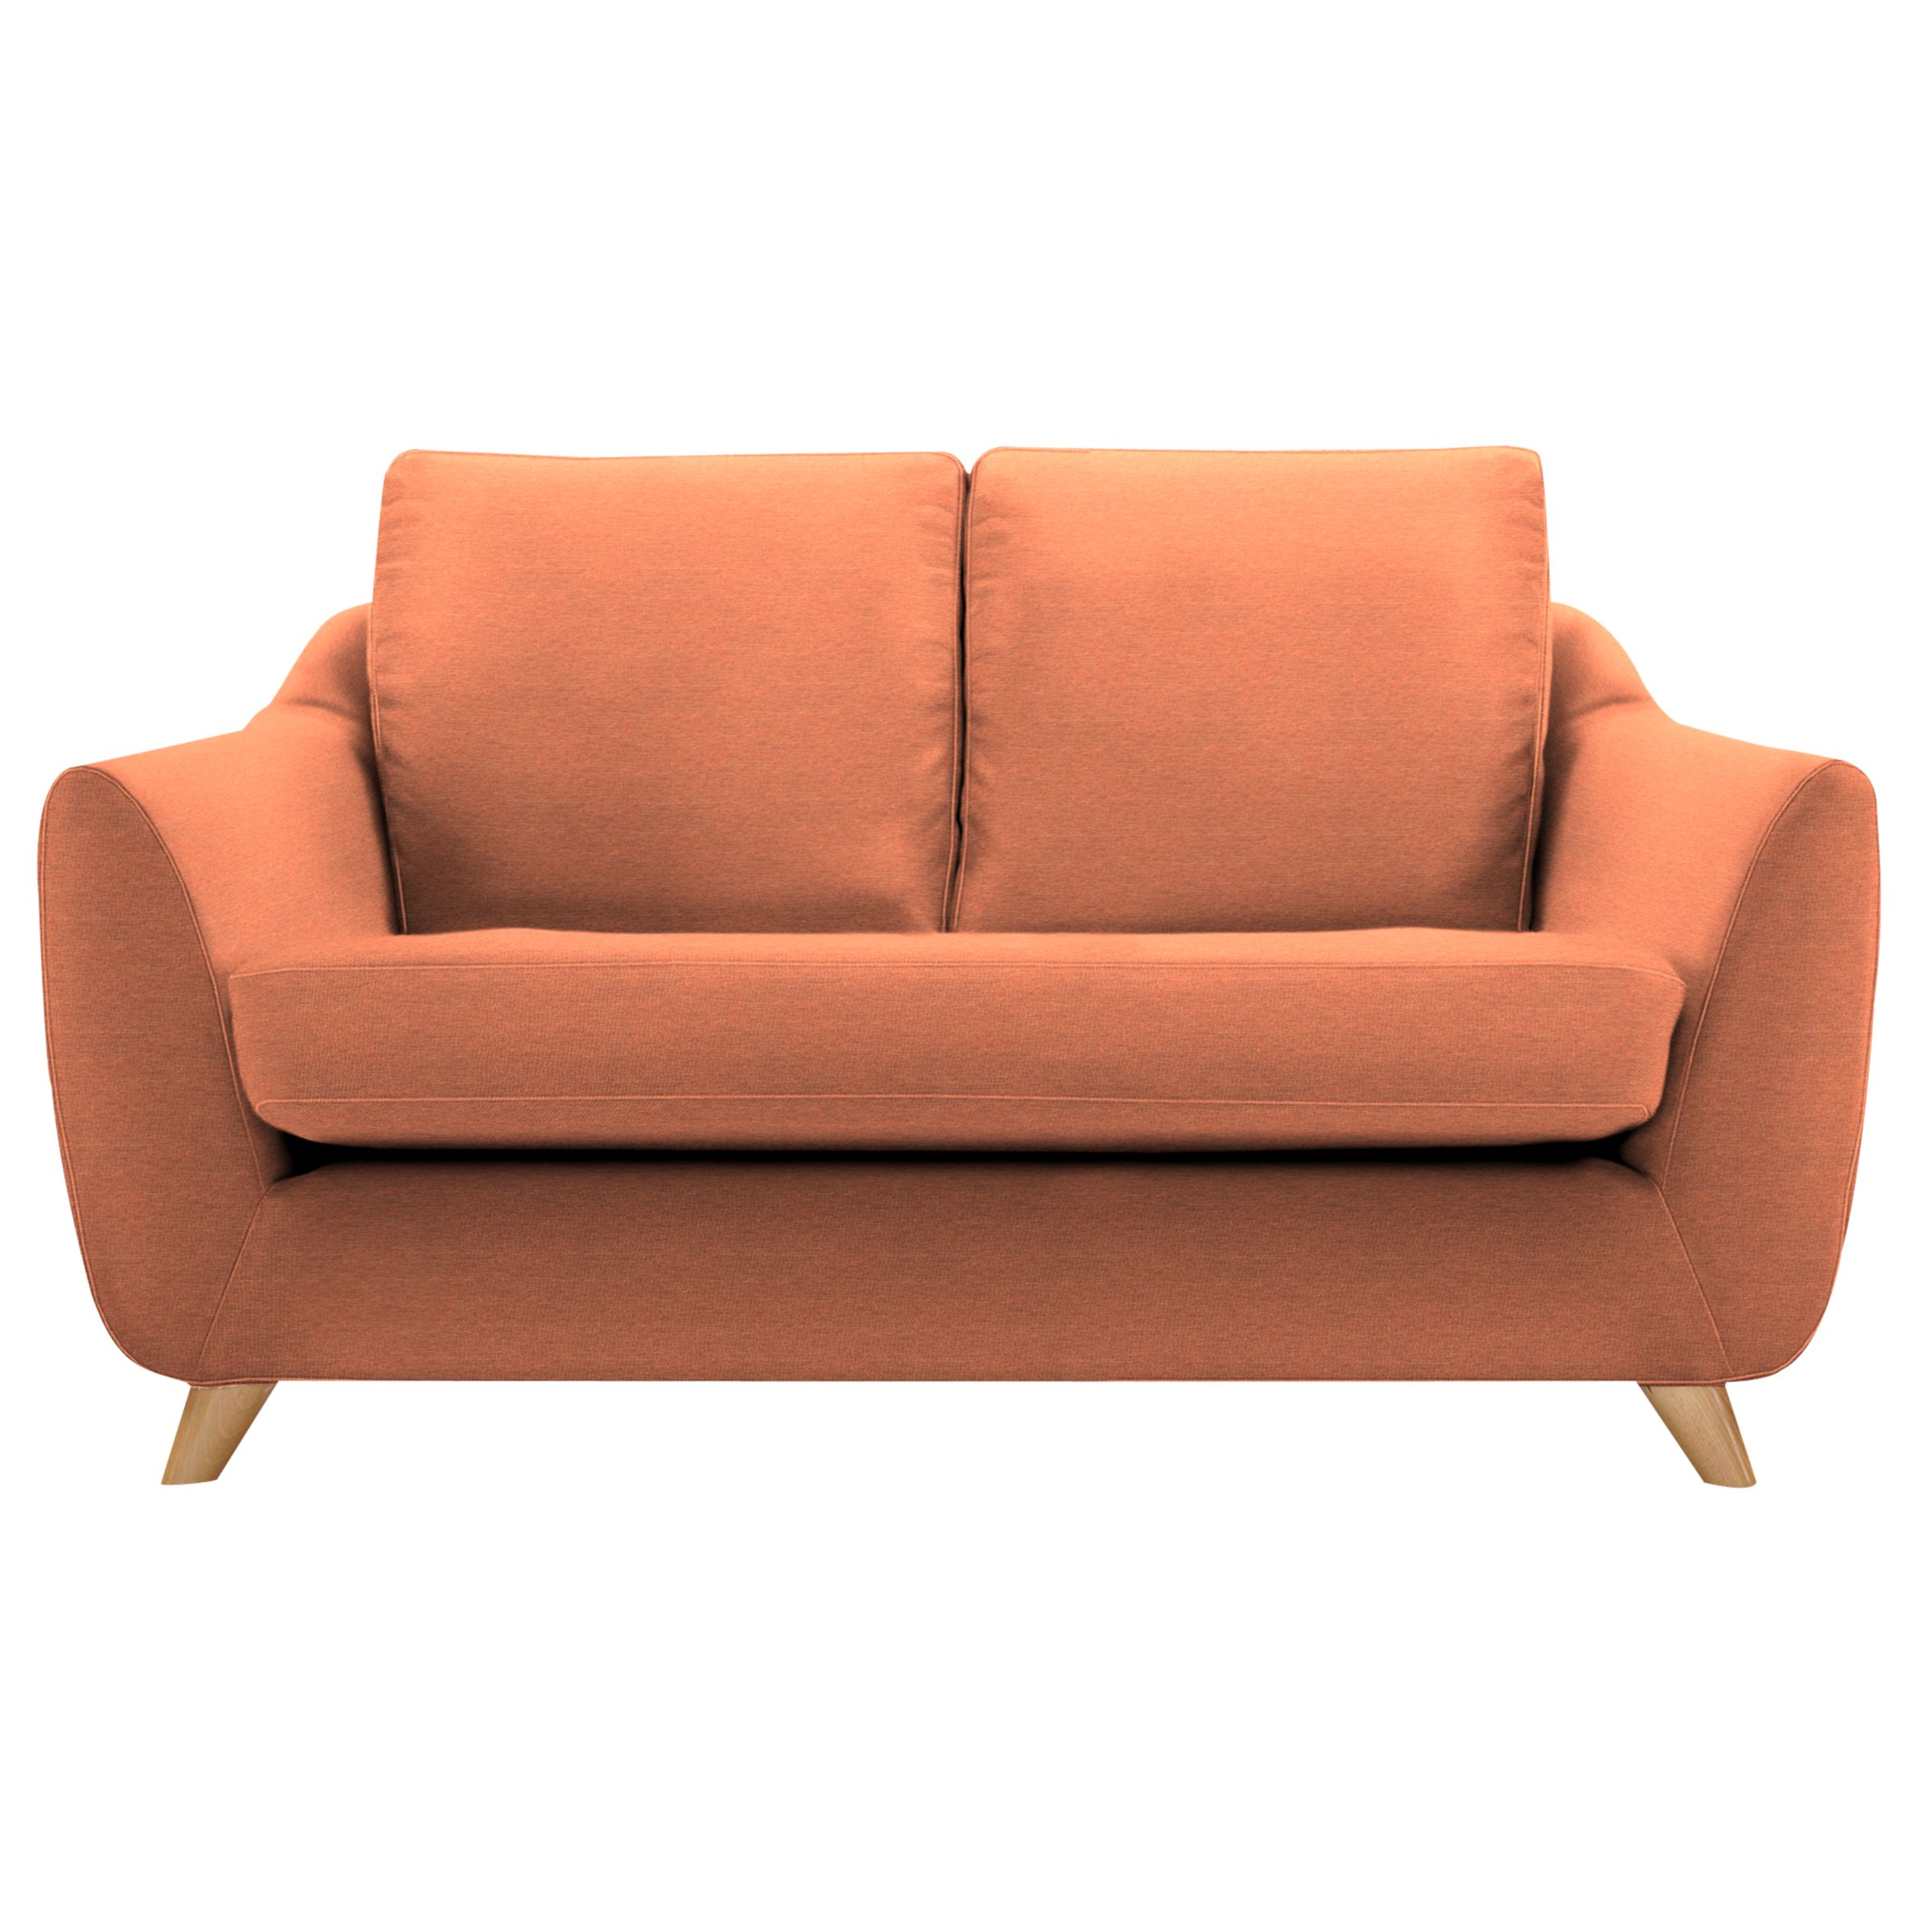 G Plan Vintage The Sixty Seven Small Sofa, Tonic Orange, width 154cm